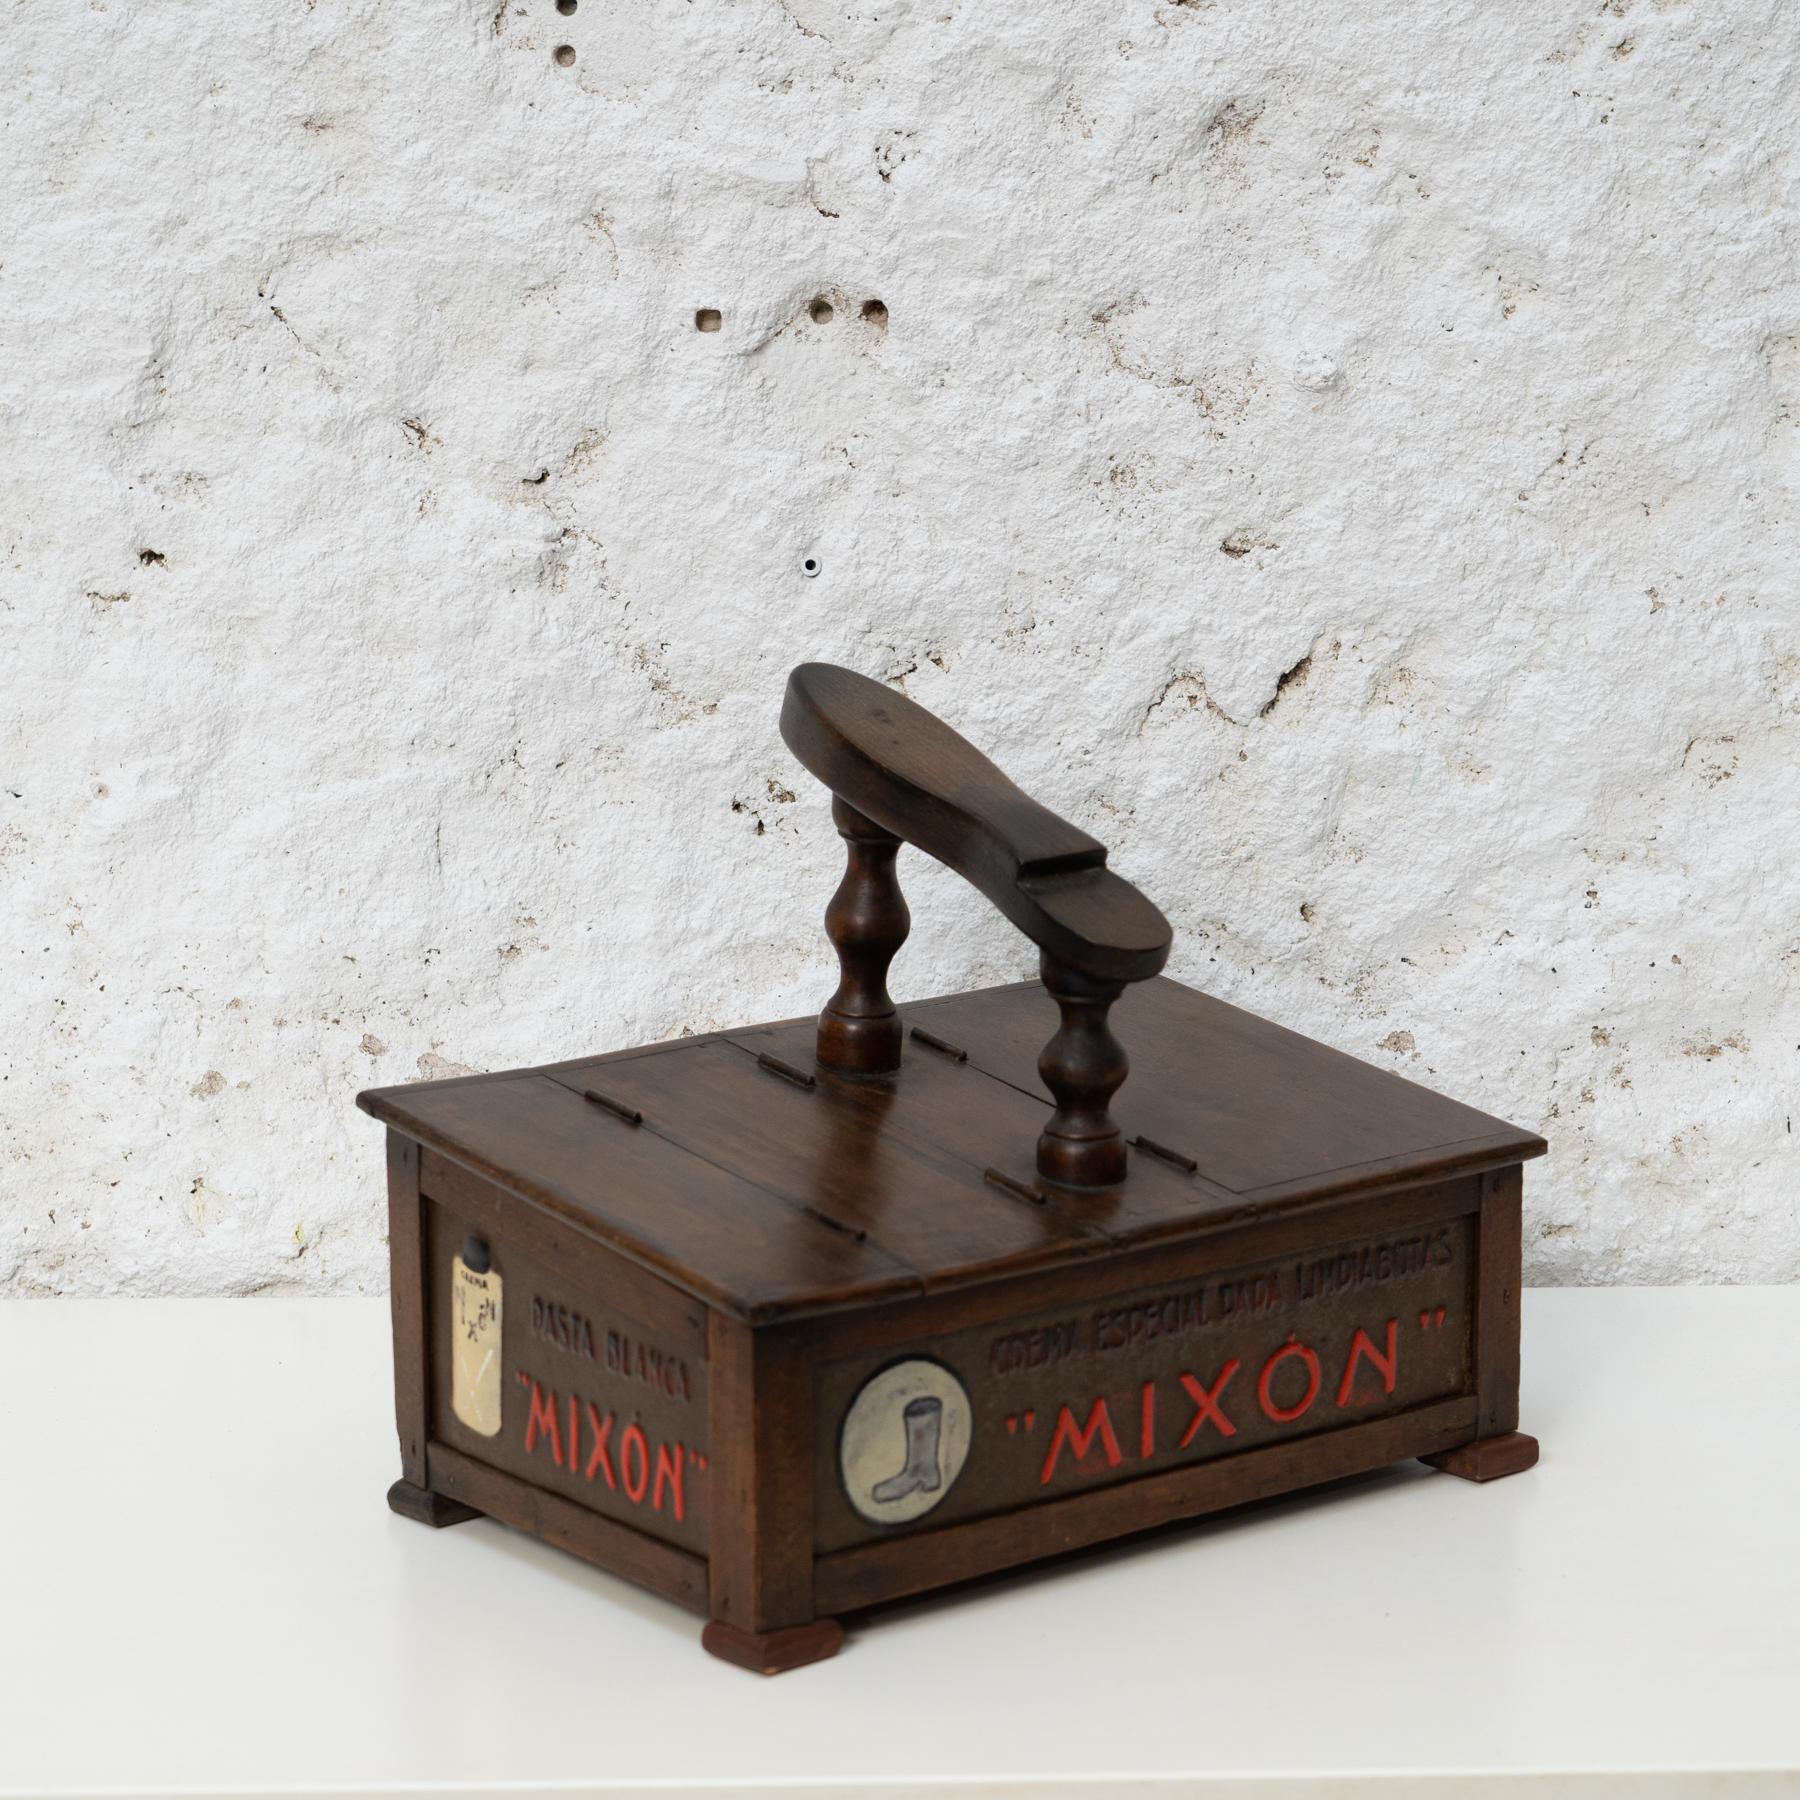 Mid-Century Modern Nostalgic Craft: Hand-Painted Shoeshiner Box, Wood and Metal, c. 1930